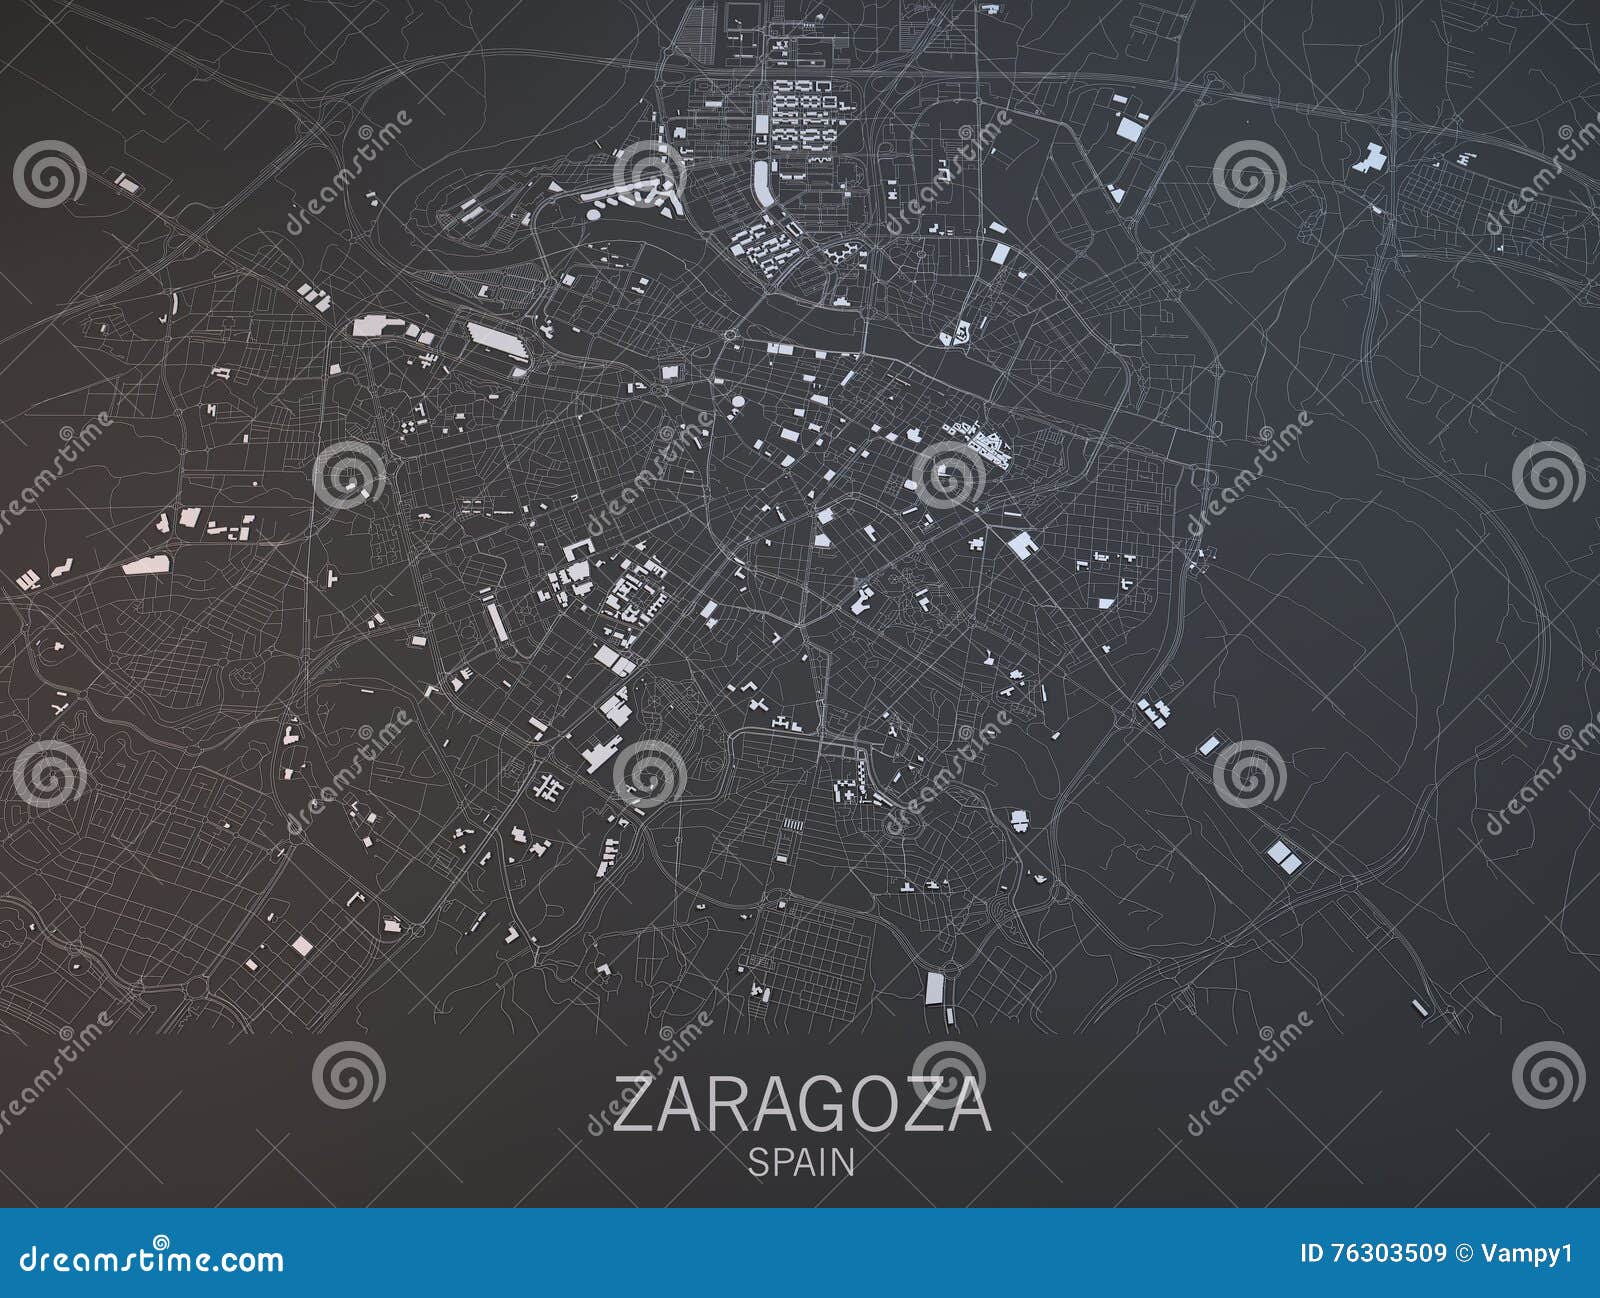 map of zaragoza, saragossa, spain